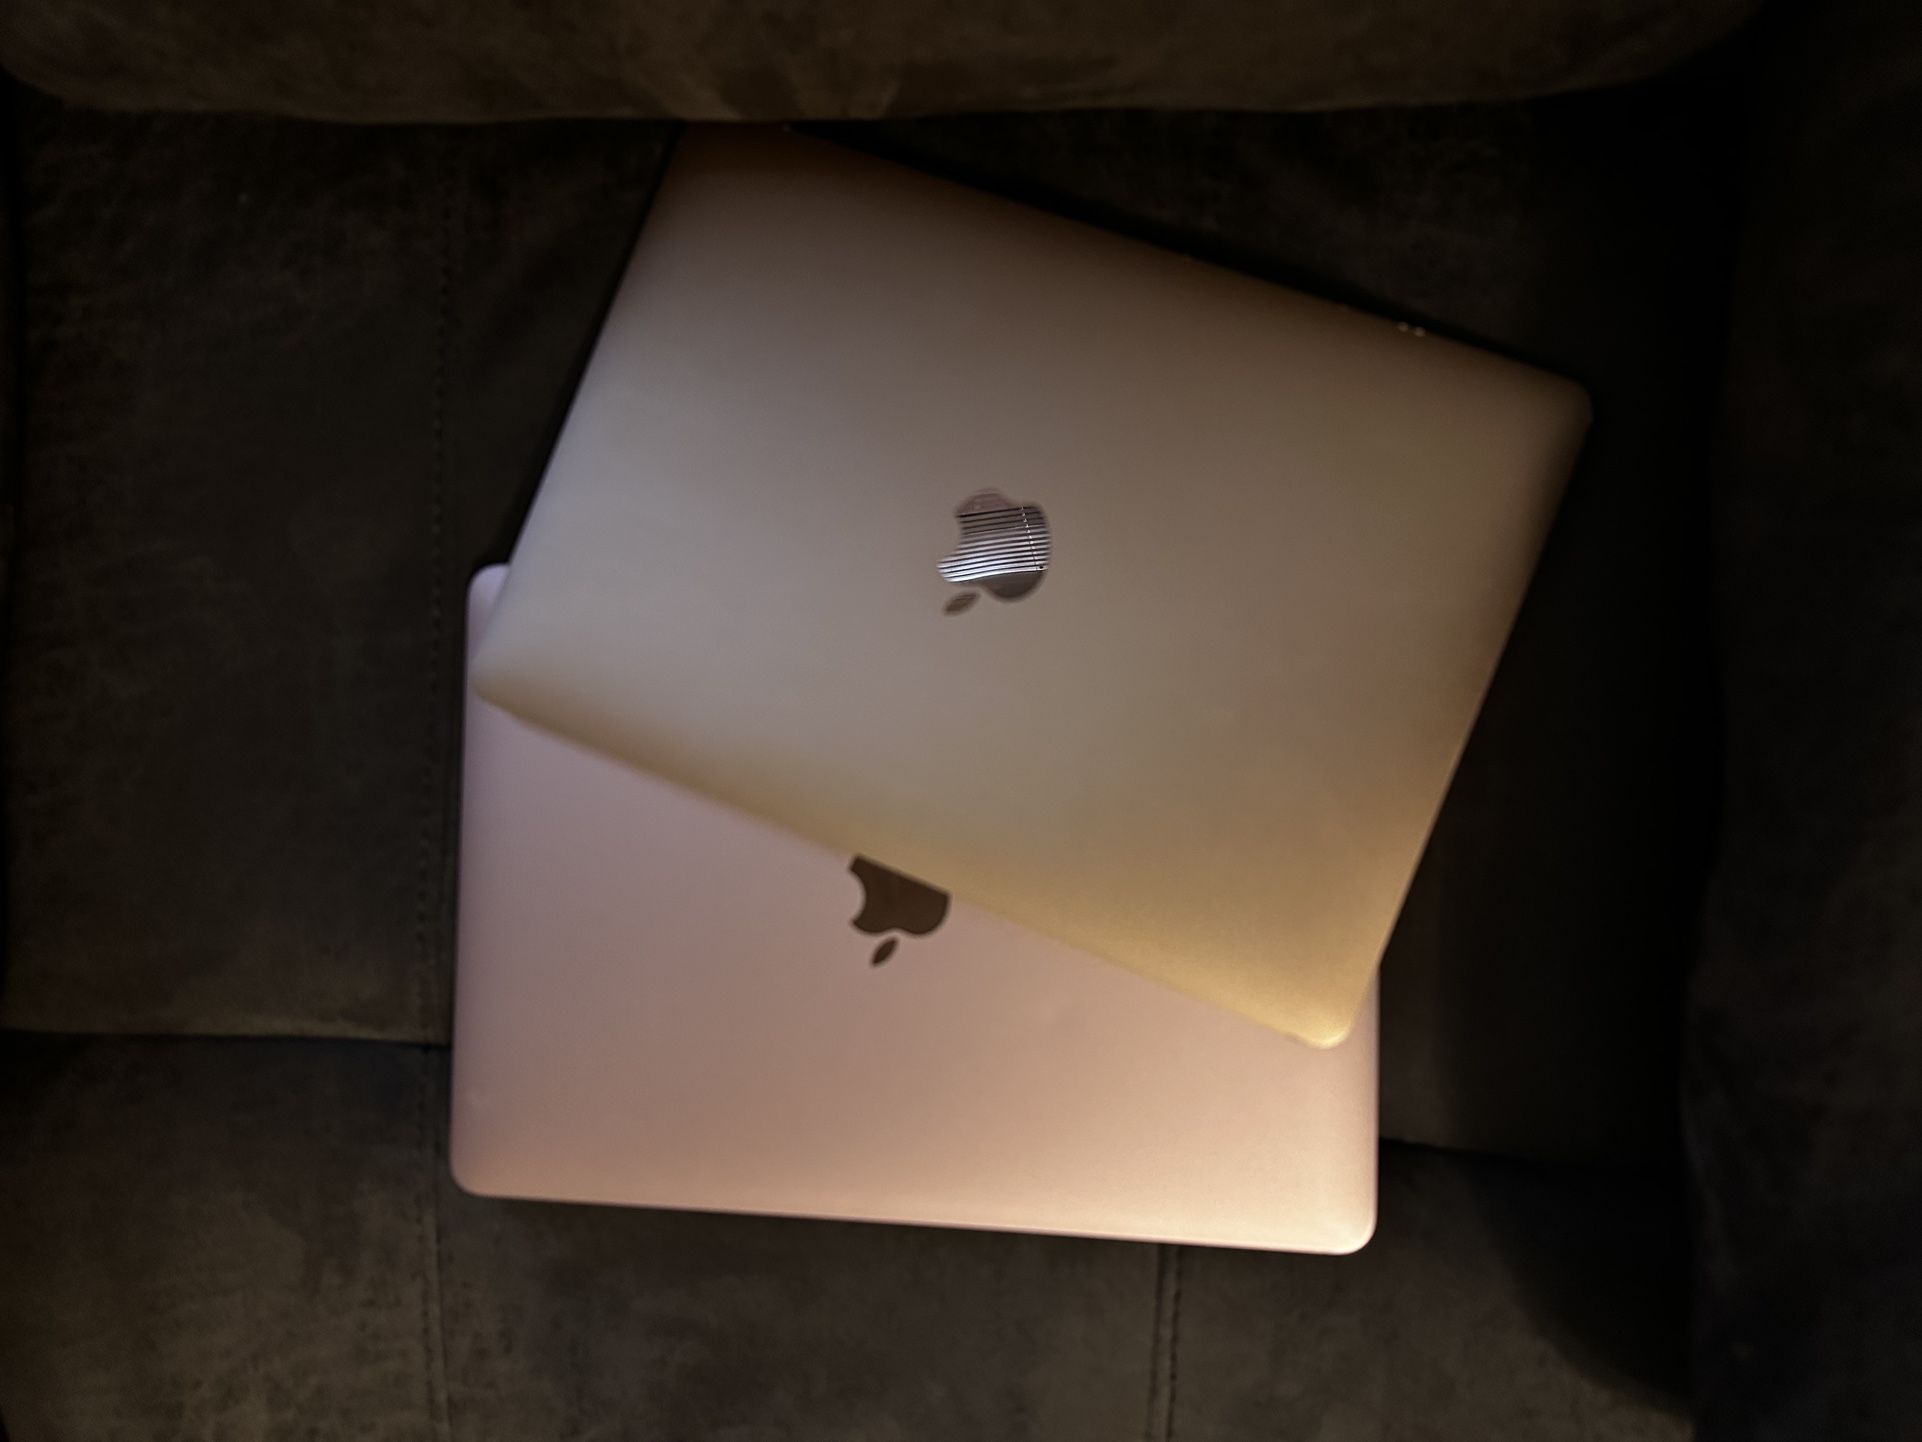 Rose Gold & Gold Macbook Air (12”)